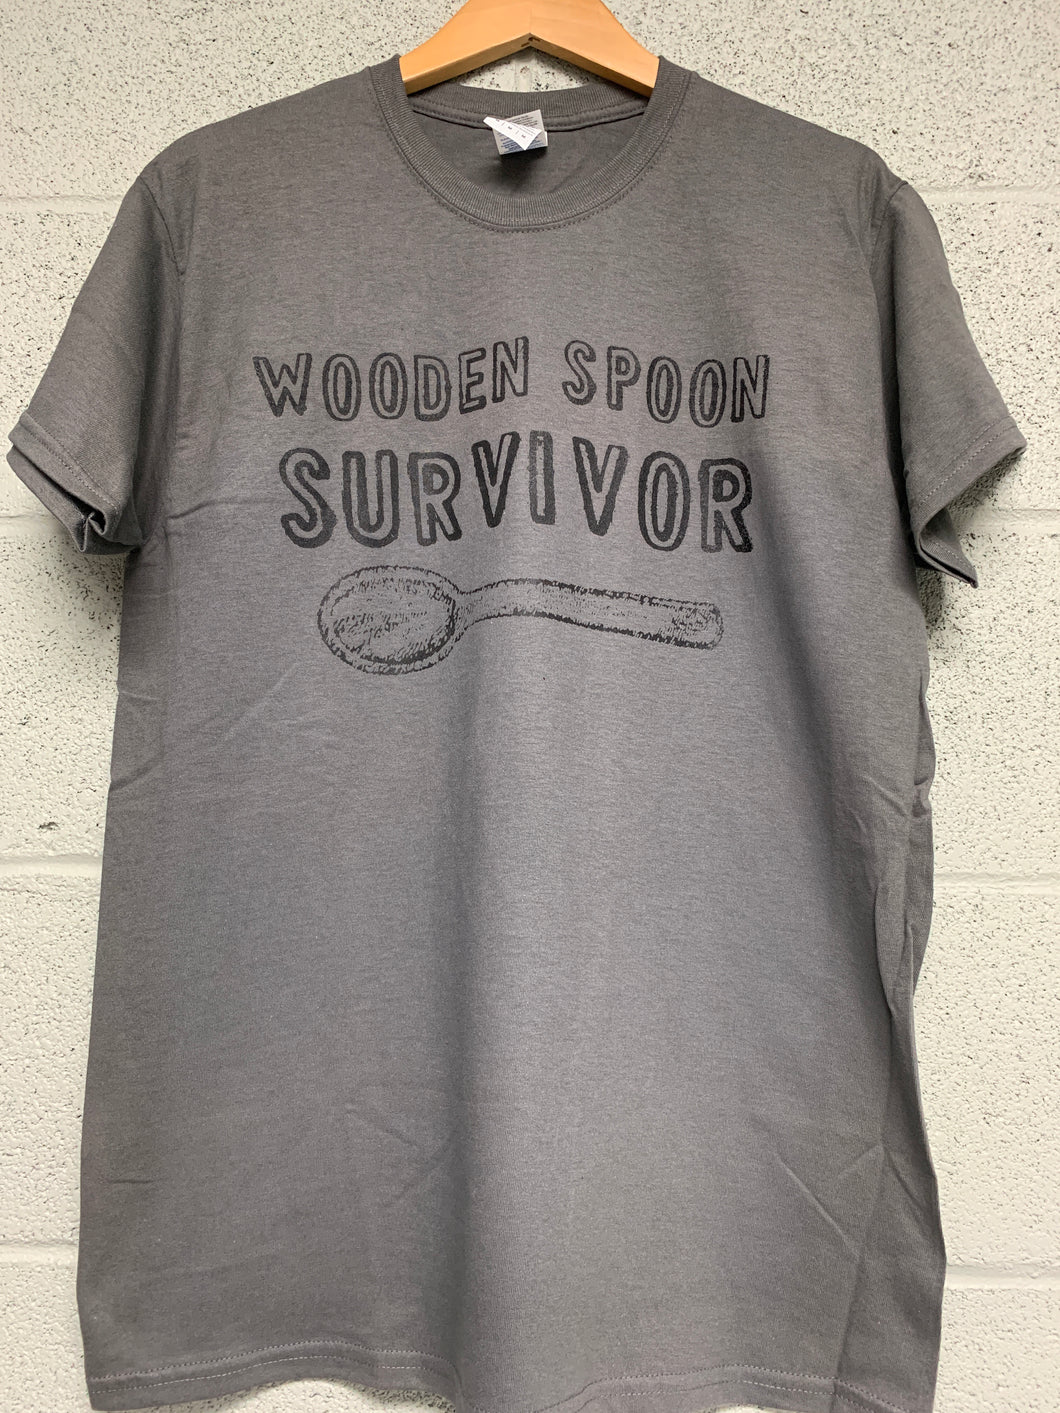 wooden spoon survivor shirt Charcoal Grey